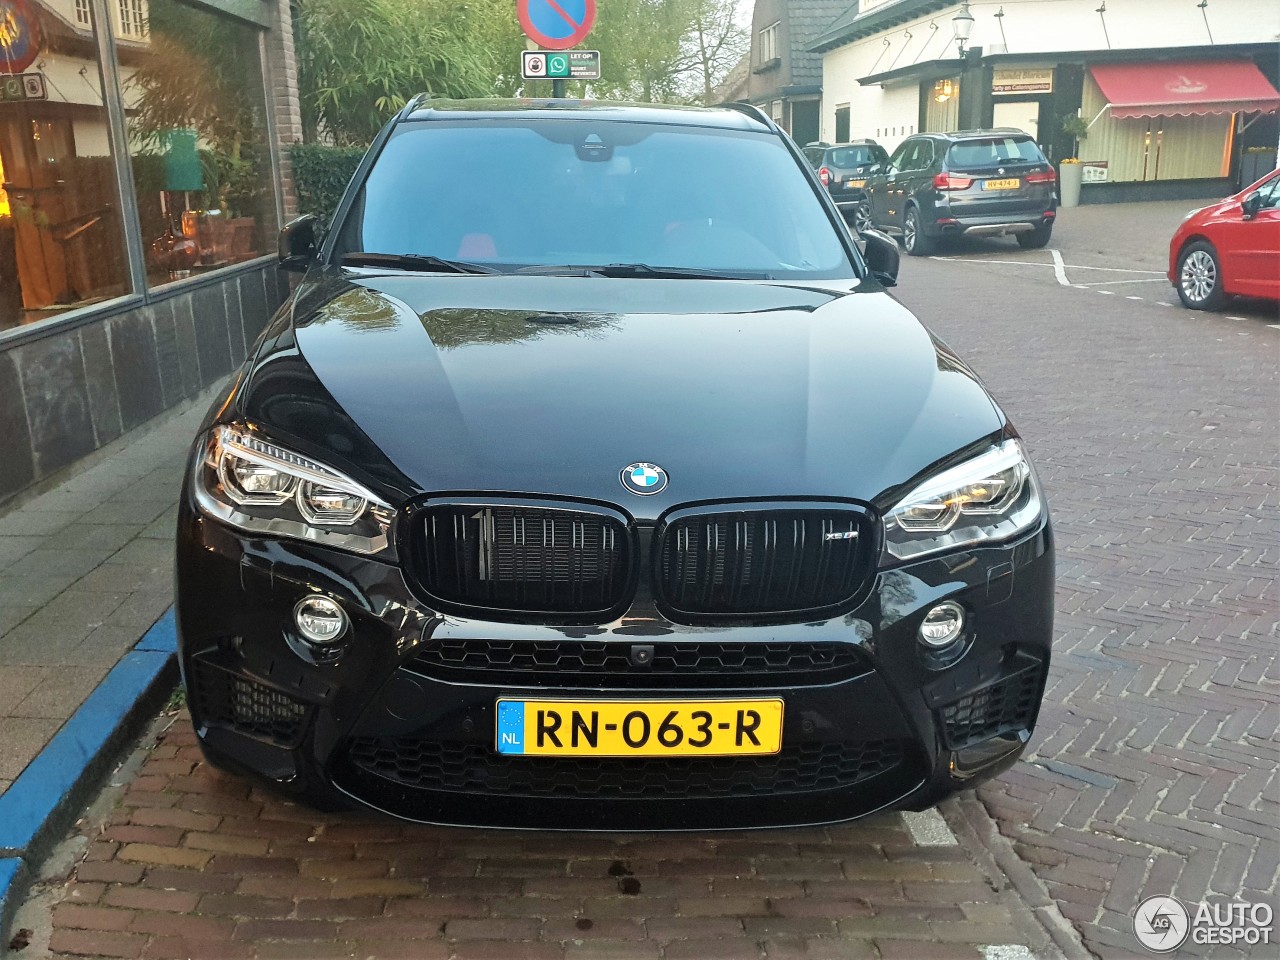 BMW X5 M F85 Edition Black Fire